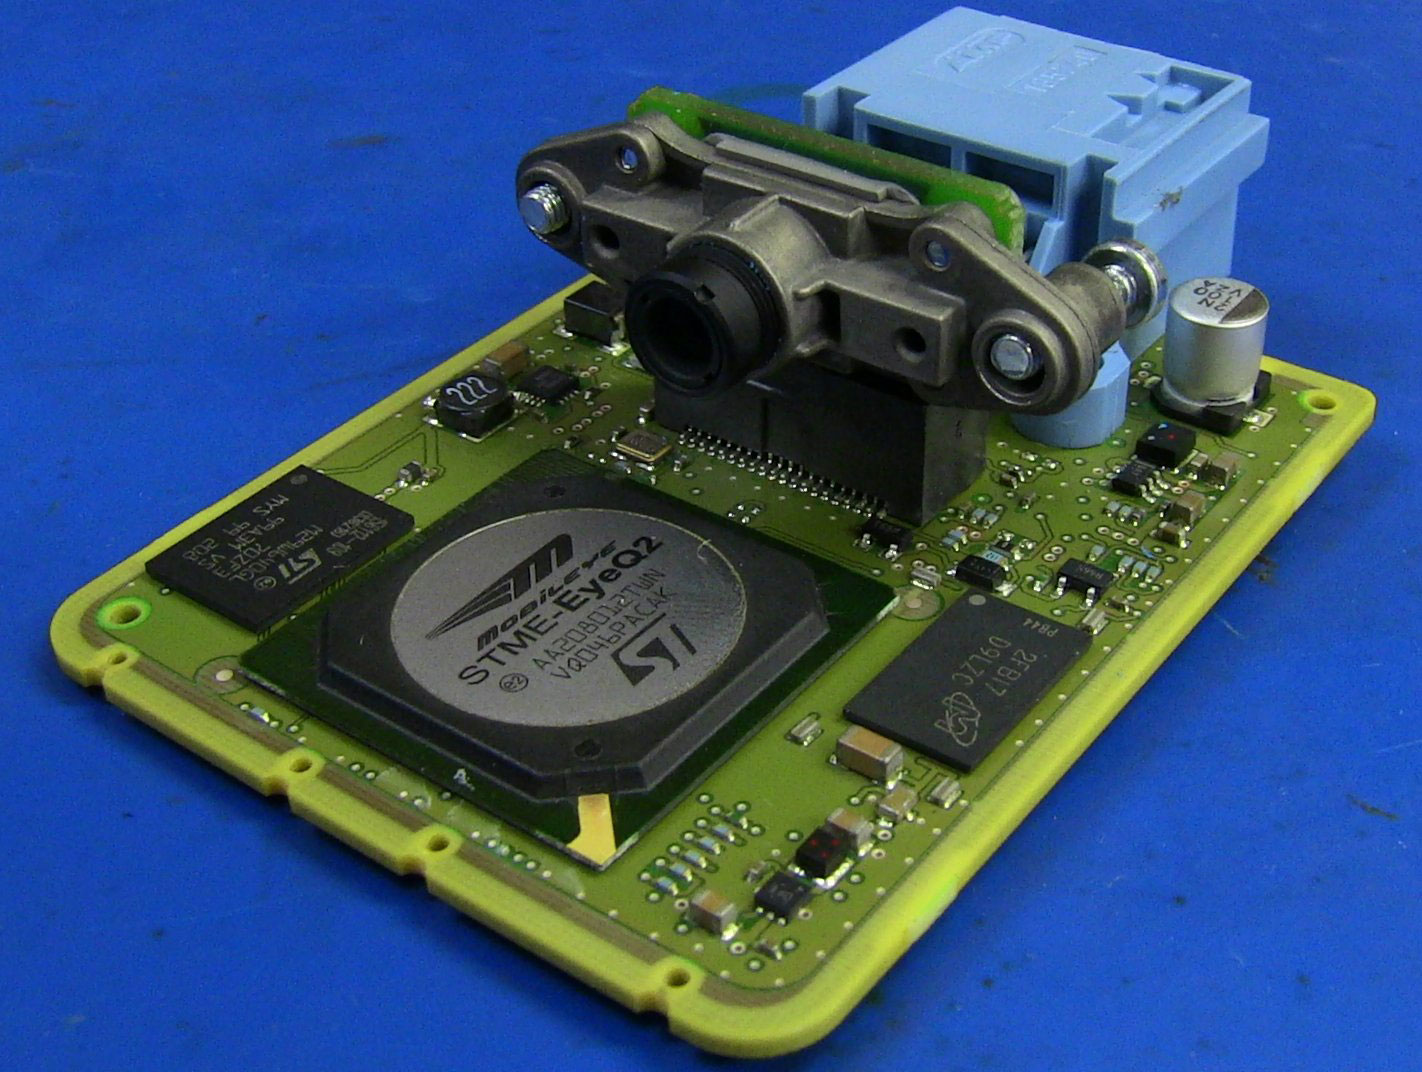 94v0--A lane guidance camera PCB from a Hyundai